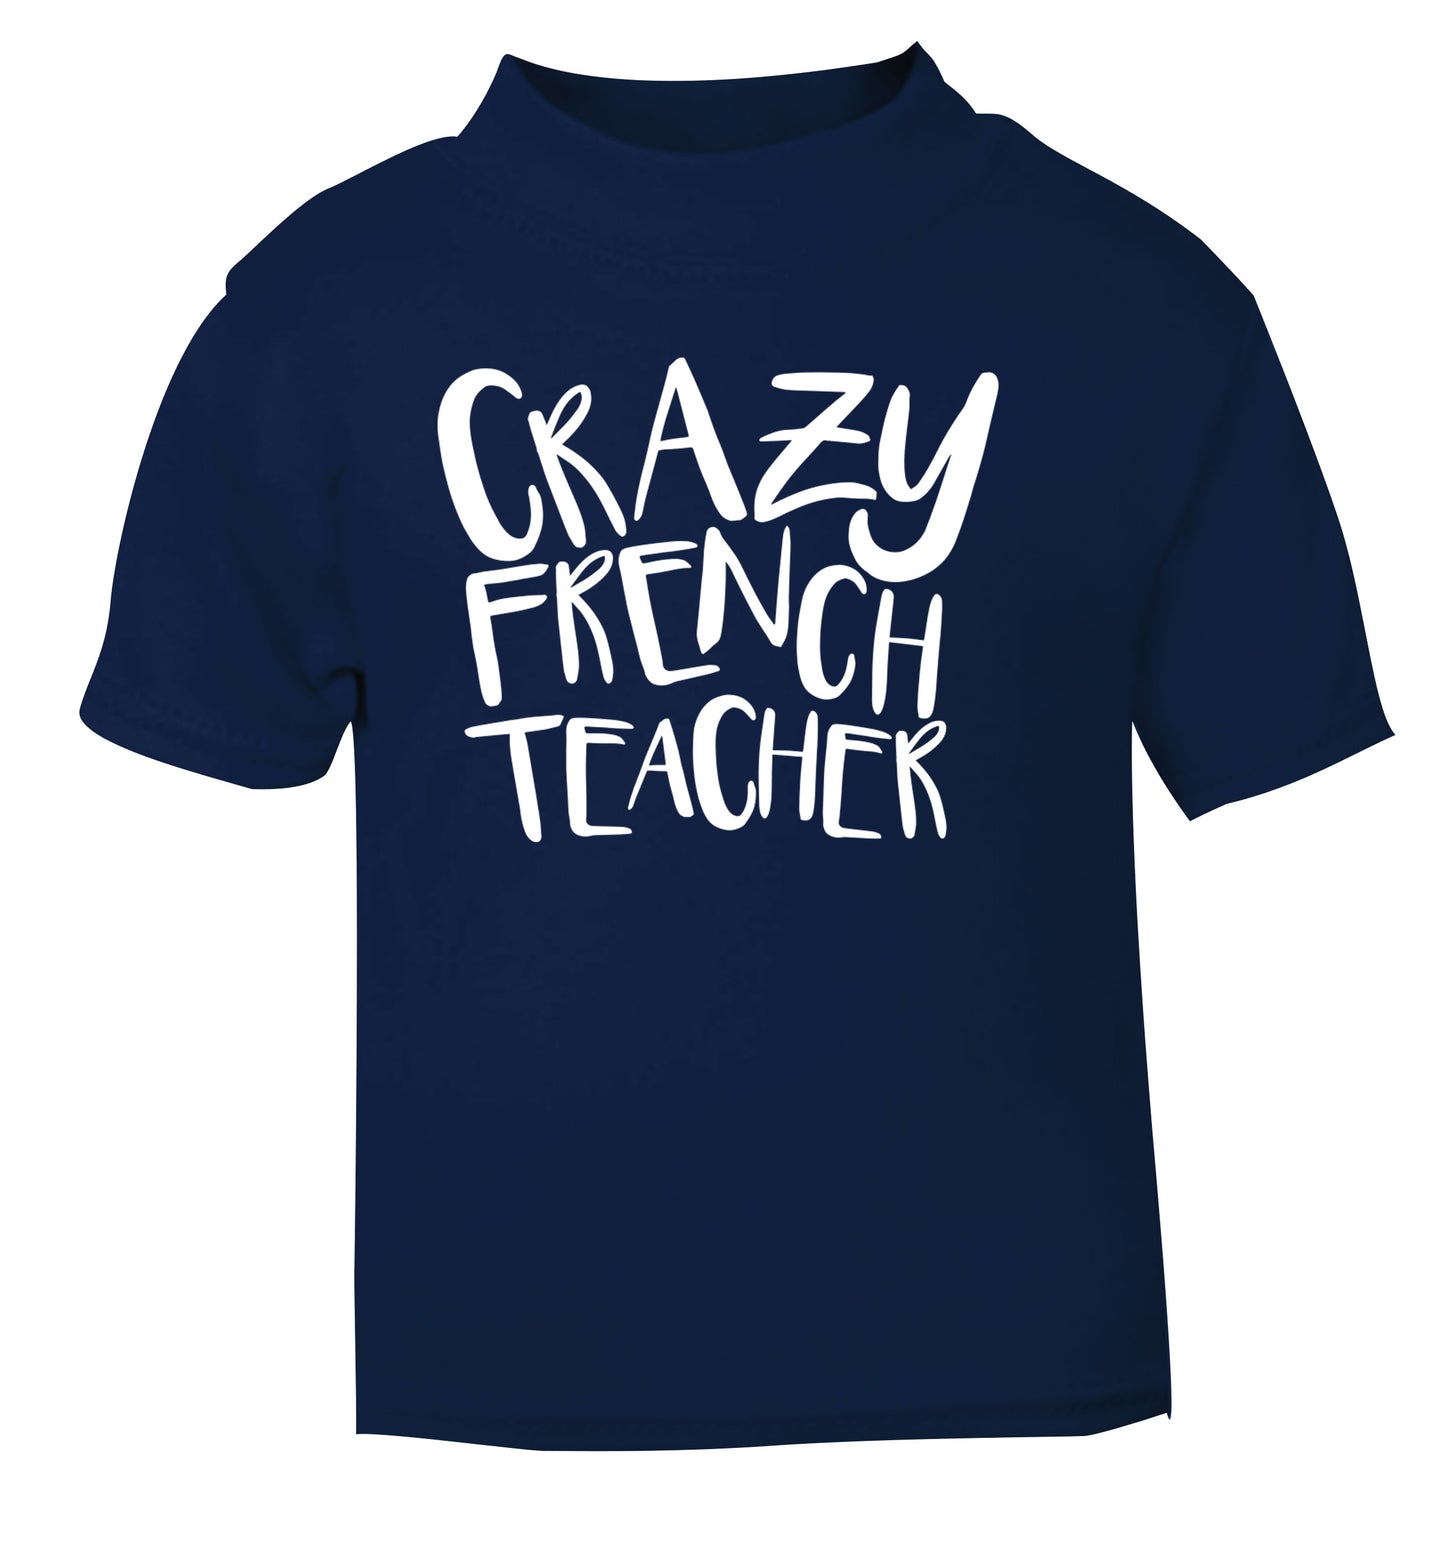 Crazy french teacher navy Baby Toddler Tshirt 2 Years